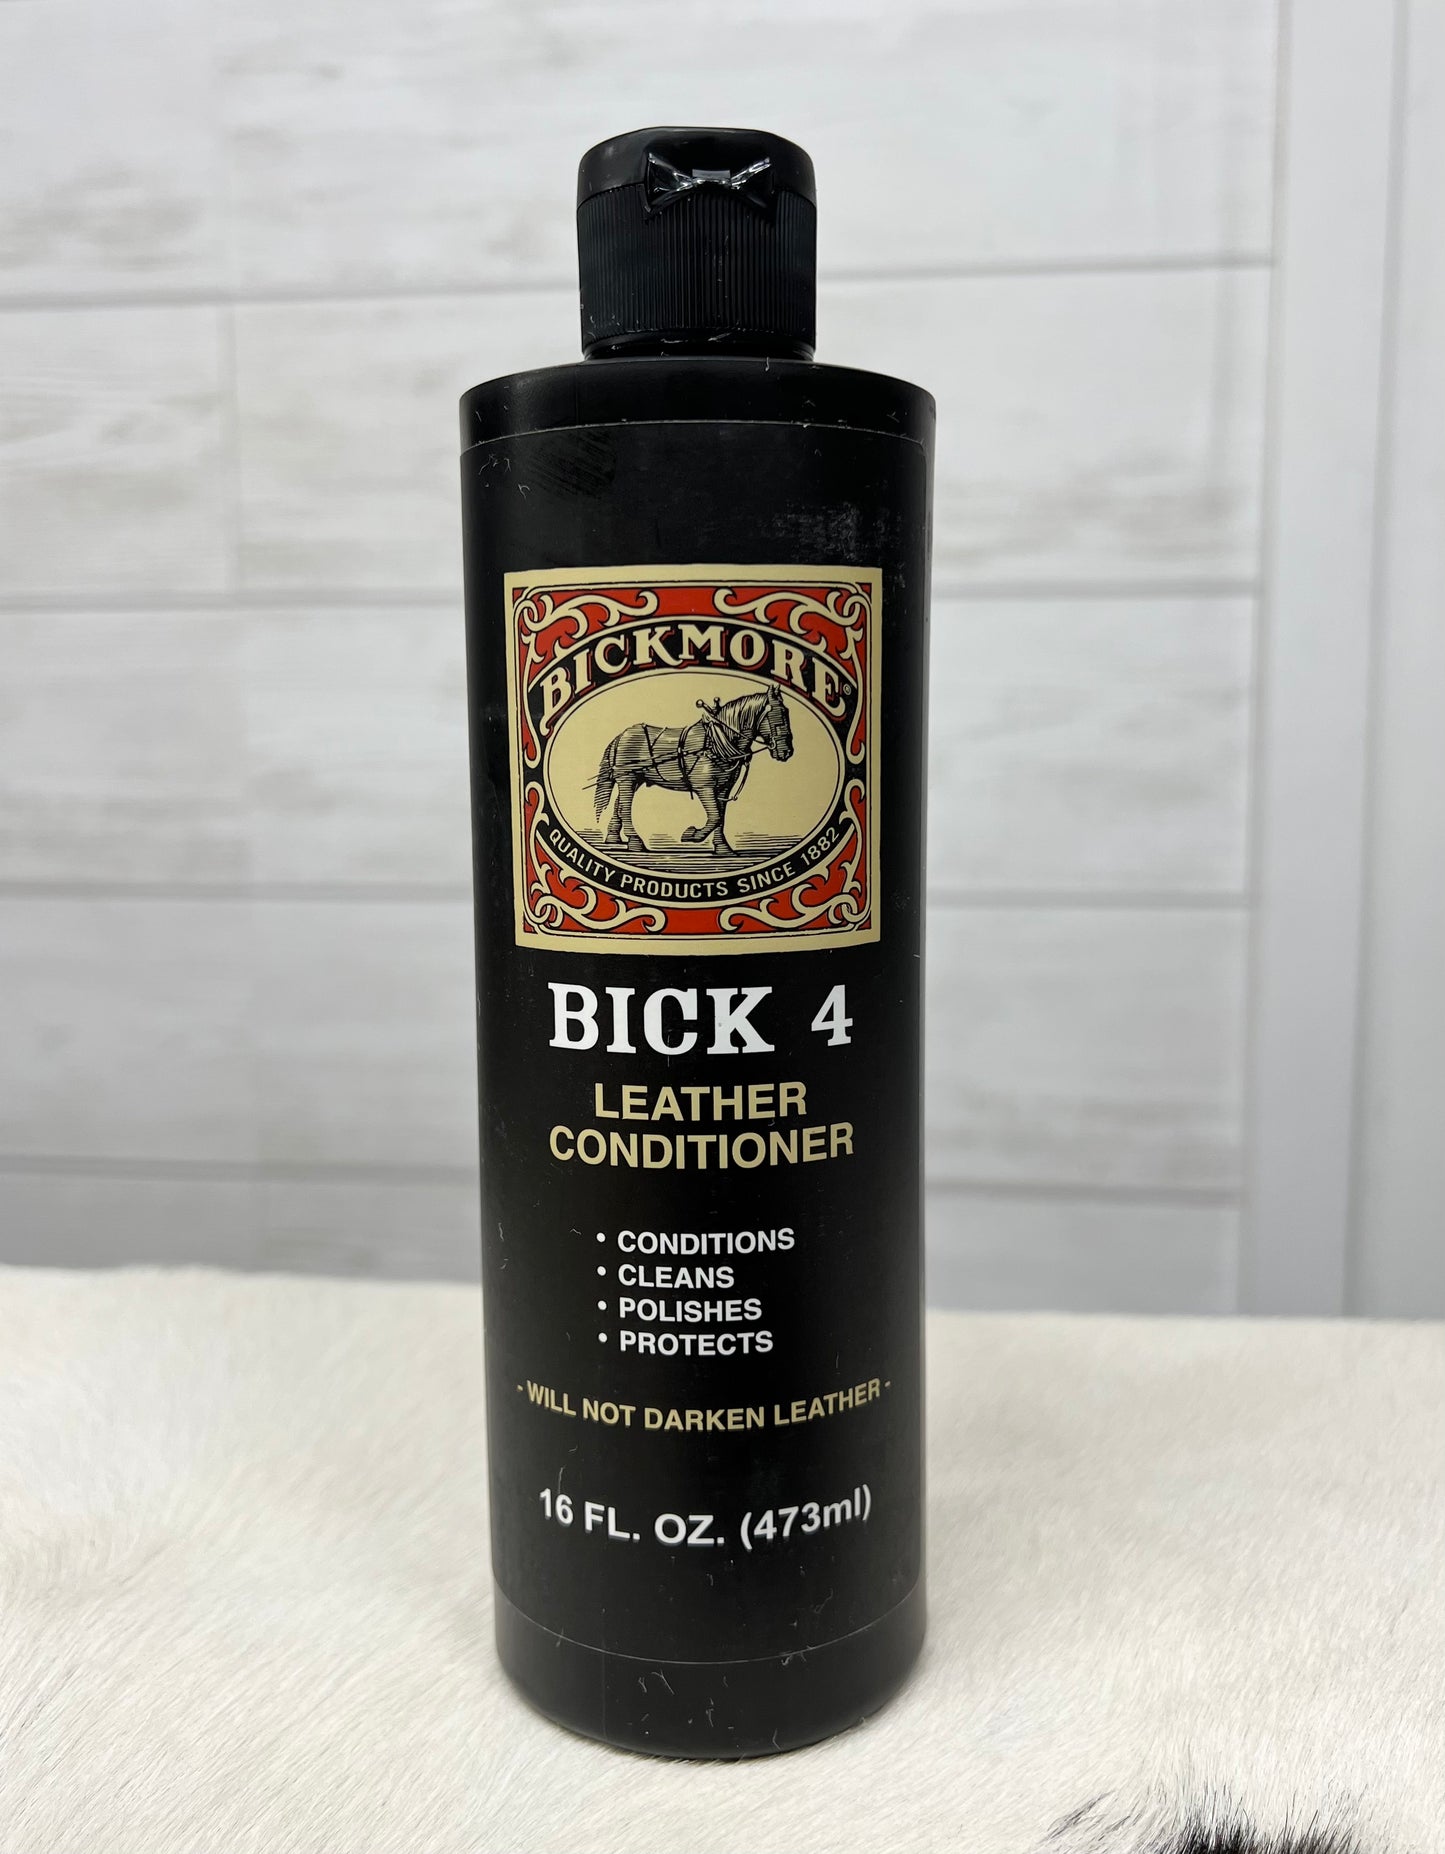 Bick-4 Leather Conditioner